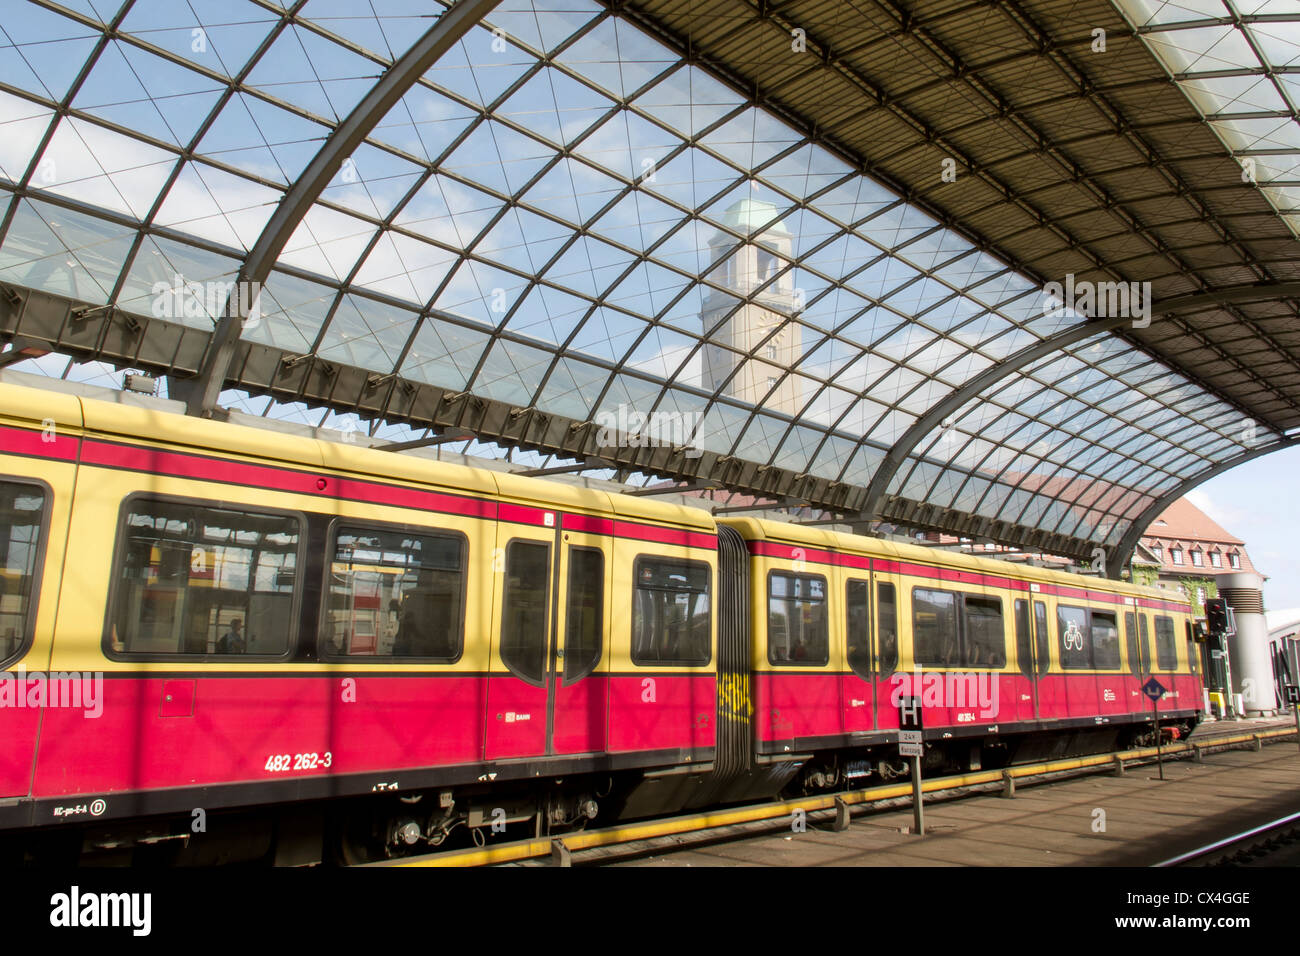 The German Railway in Berlin – Spandau an S Bahn suburban train in a German station Stock Photo